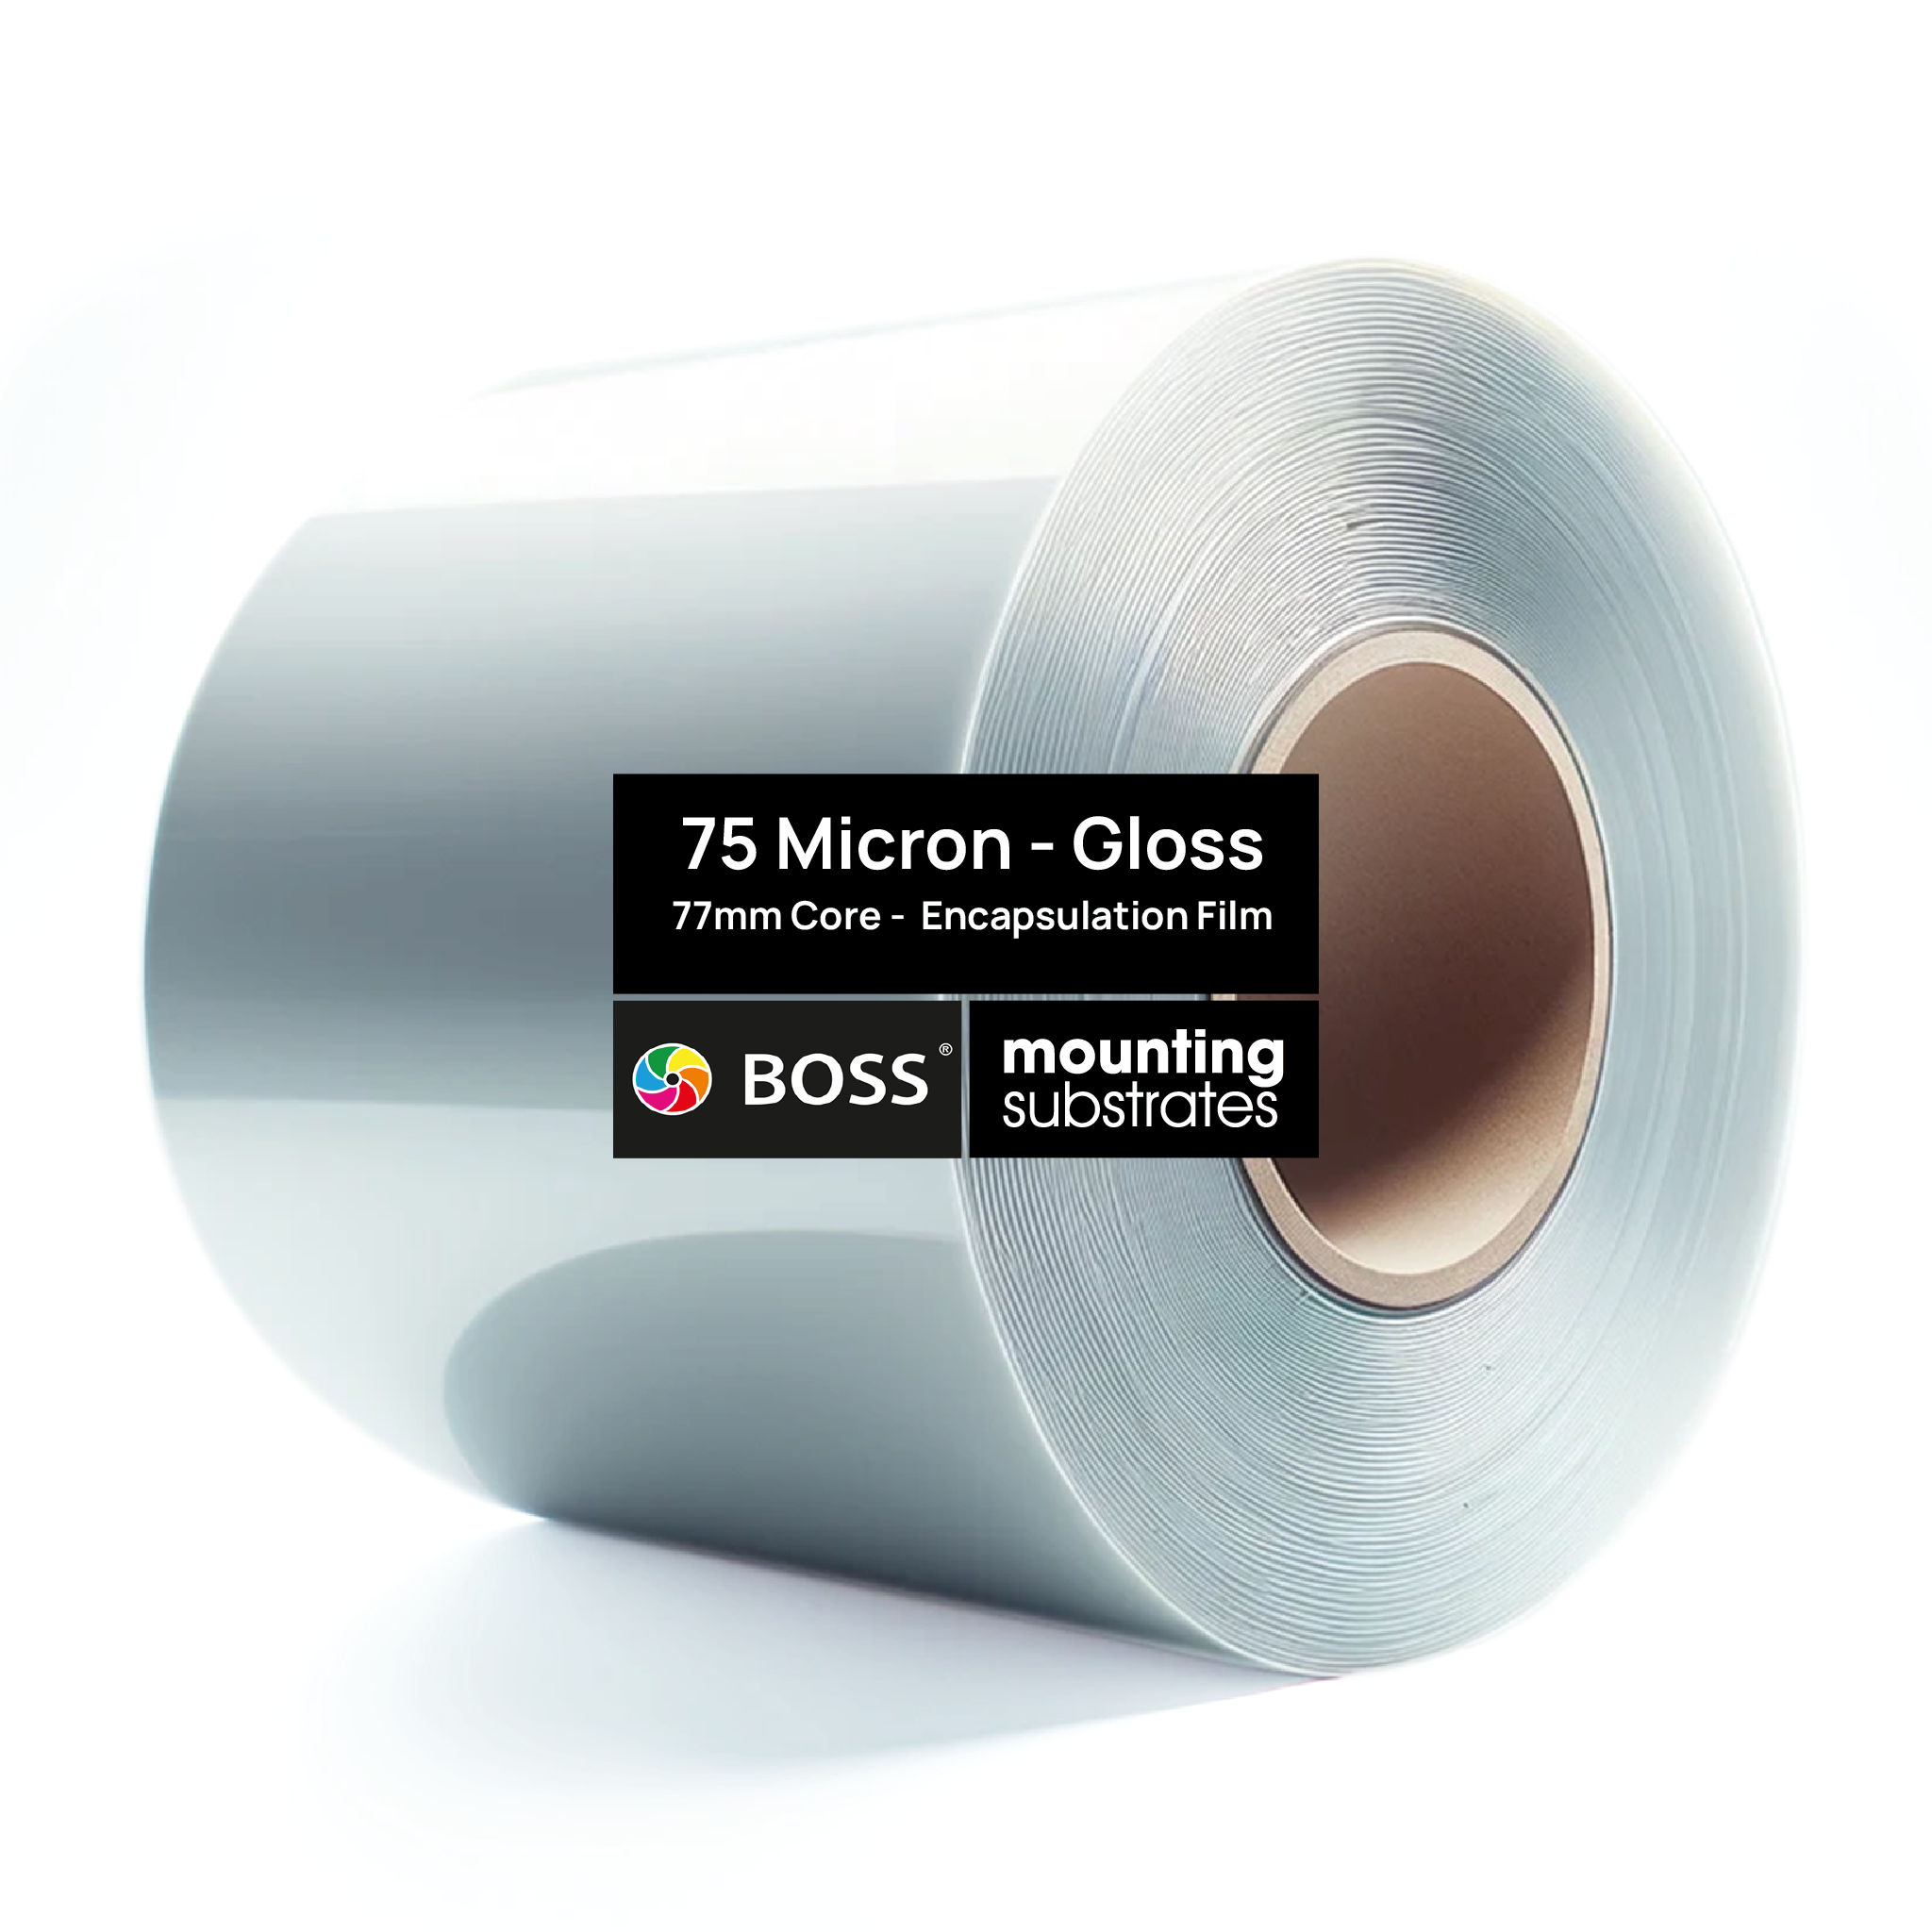 Gloss 75 micron Encapsulation Film - Boss Low Melt Laminate Gloss - 77mm Core